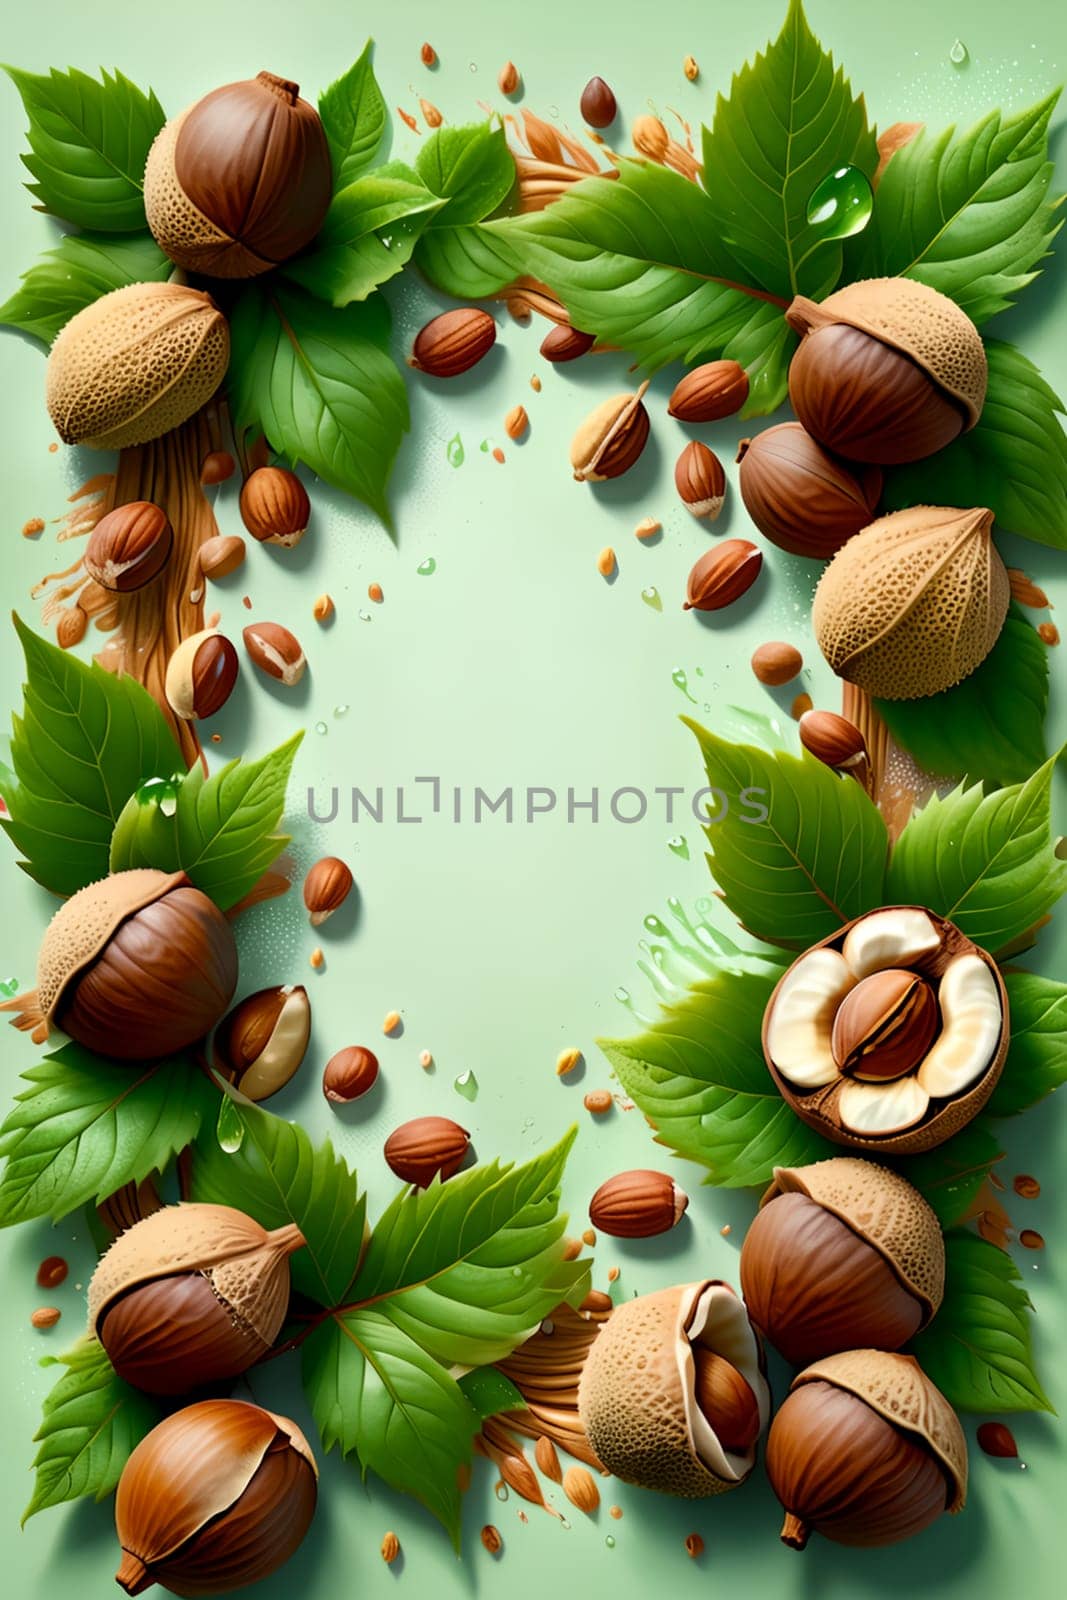 Hazelnuts with foliage isolated on green background, frame